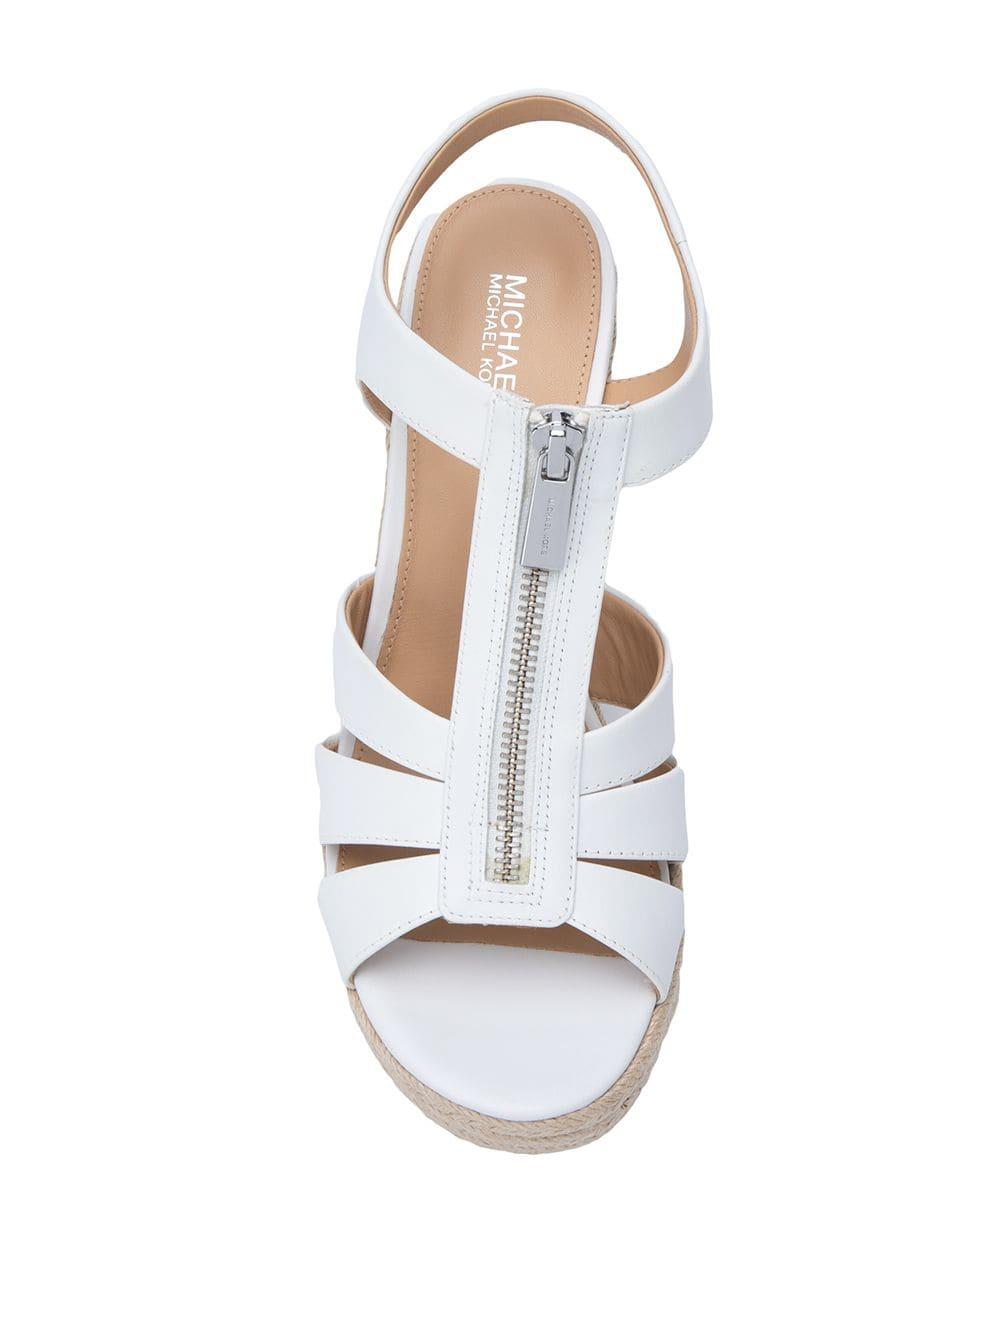 MICHAEL Michael Kors Berkley Wedge Sandals in White - Lyst